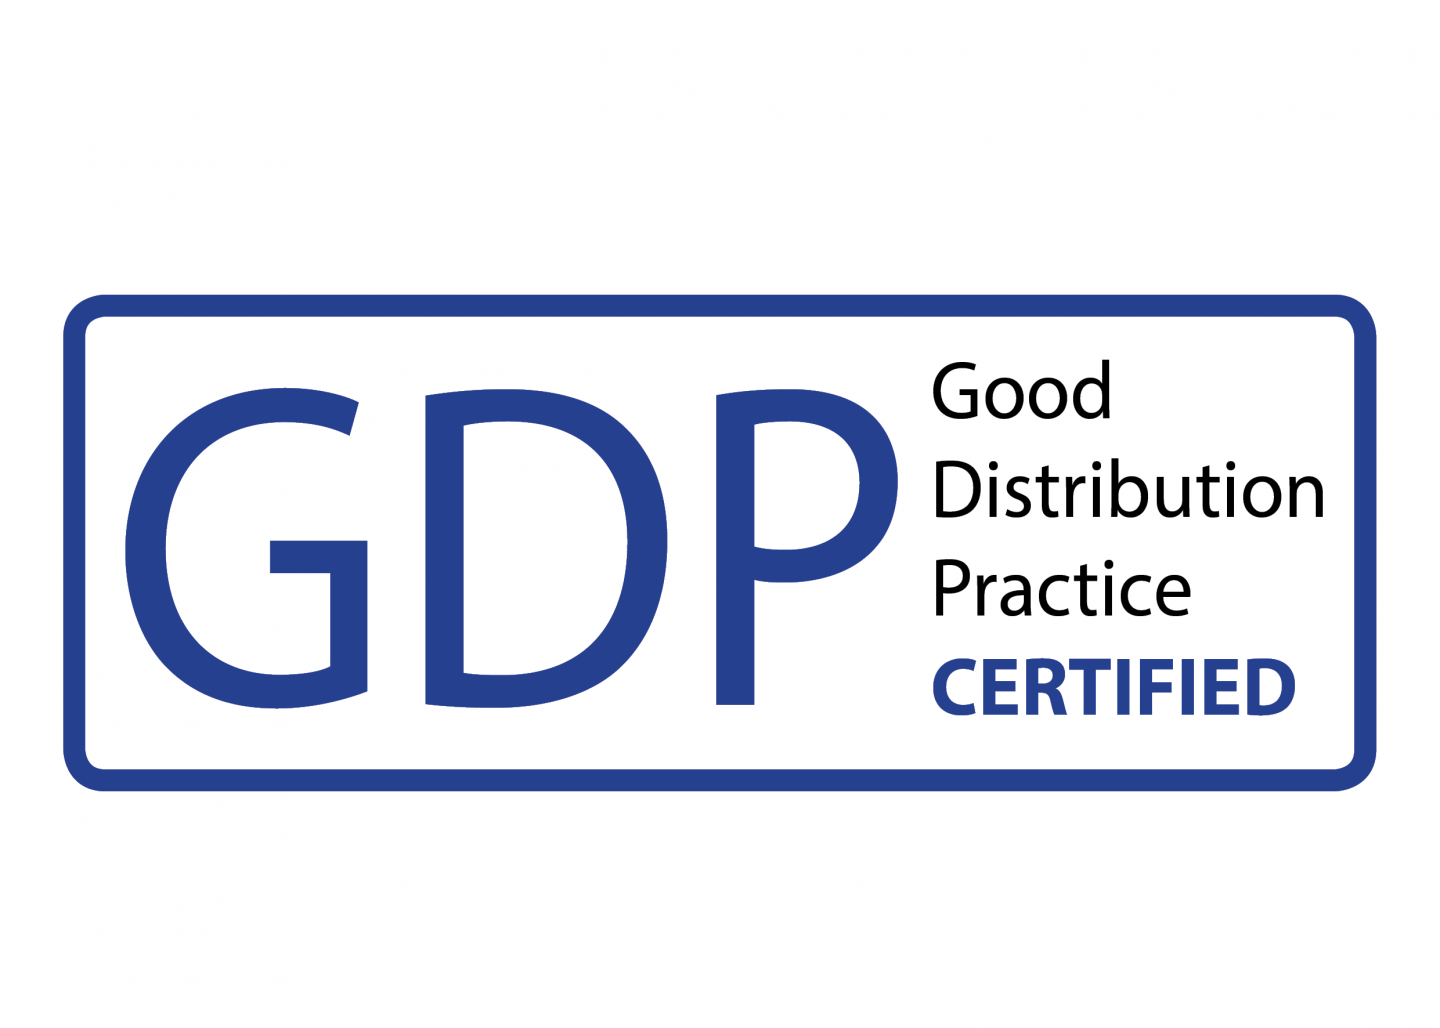 GDP стандарт. Надлежащая дистрибьюторская практика GDP. GDP good distribution Practice надлежащая дистрибьюторская практика. Сертификат GDP. Надлежащая документация